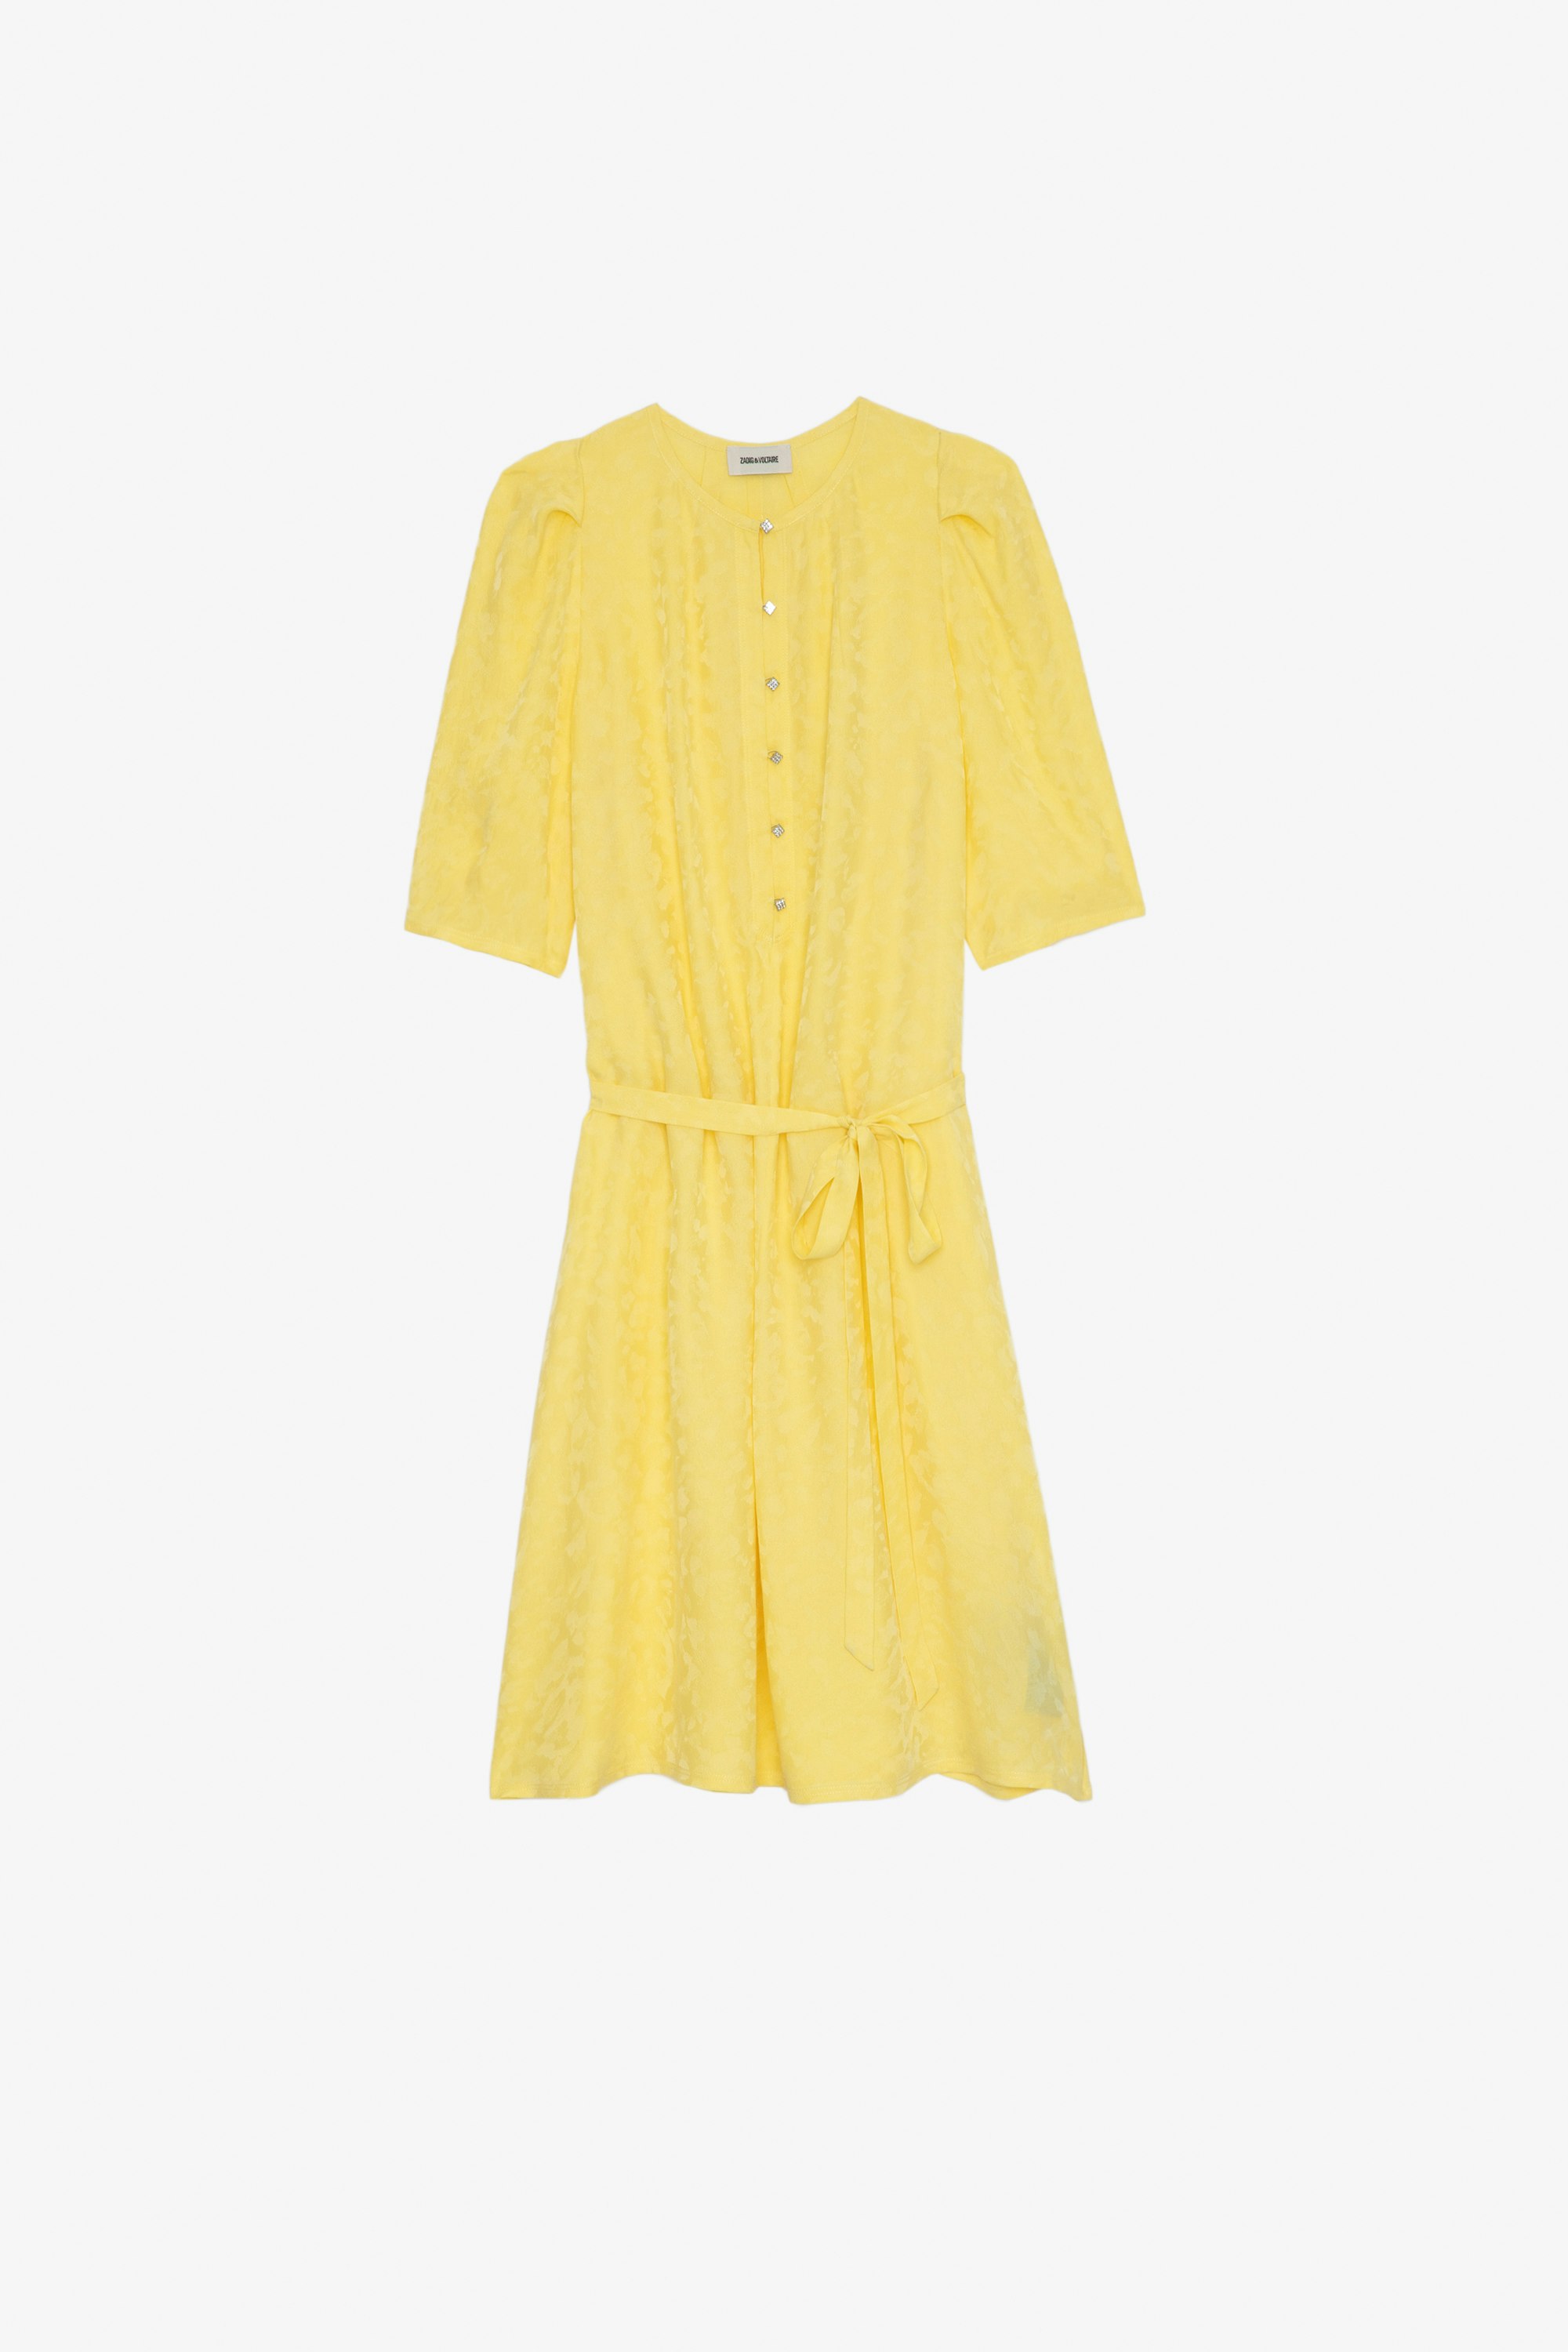 Rodji Silk Dress Women's short dress in yellow leopard silk jacquard with puffed sleeves and belt